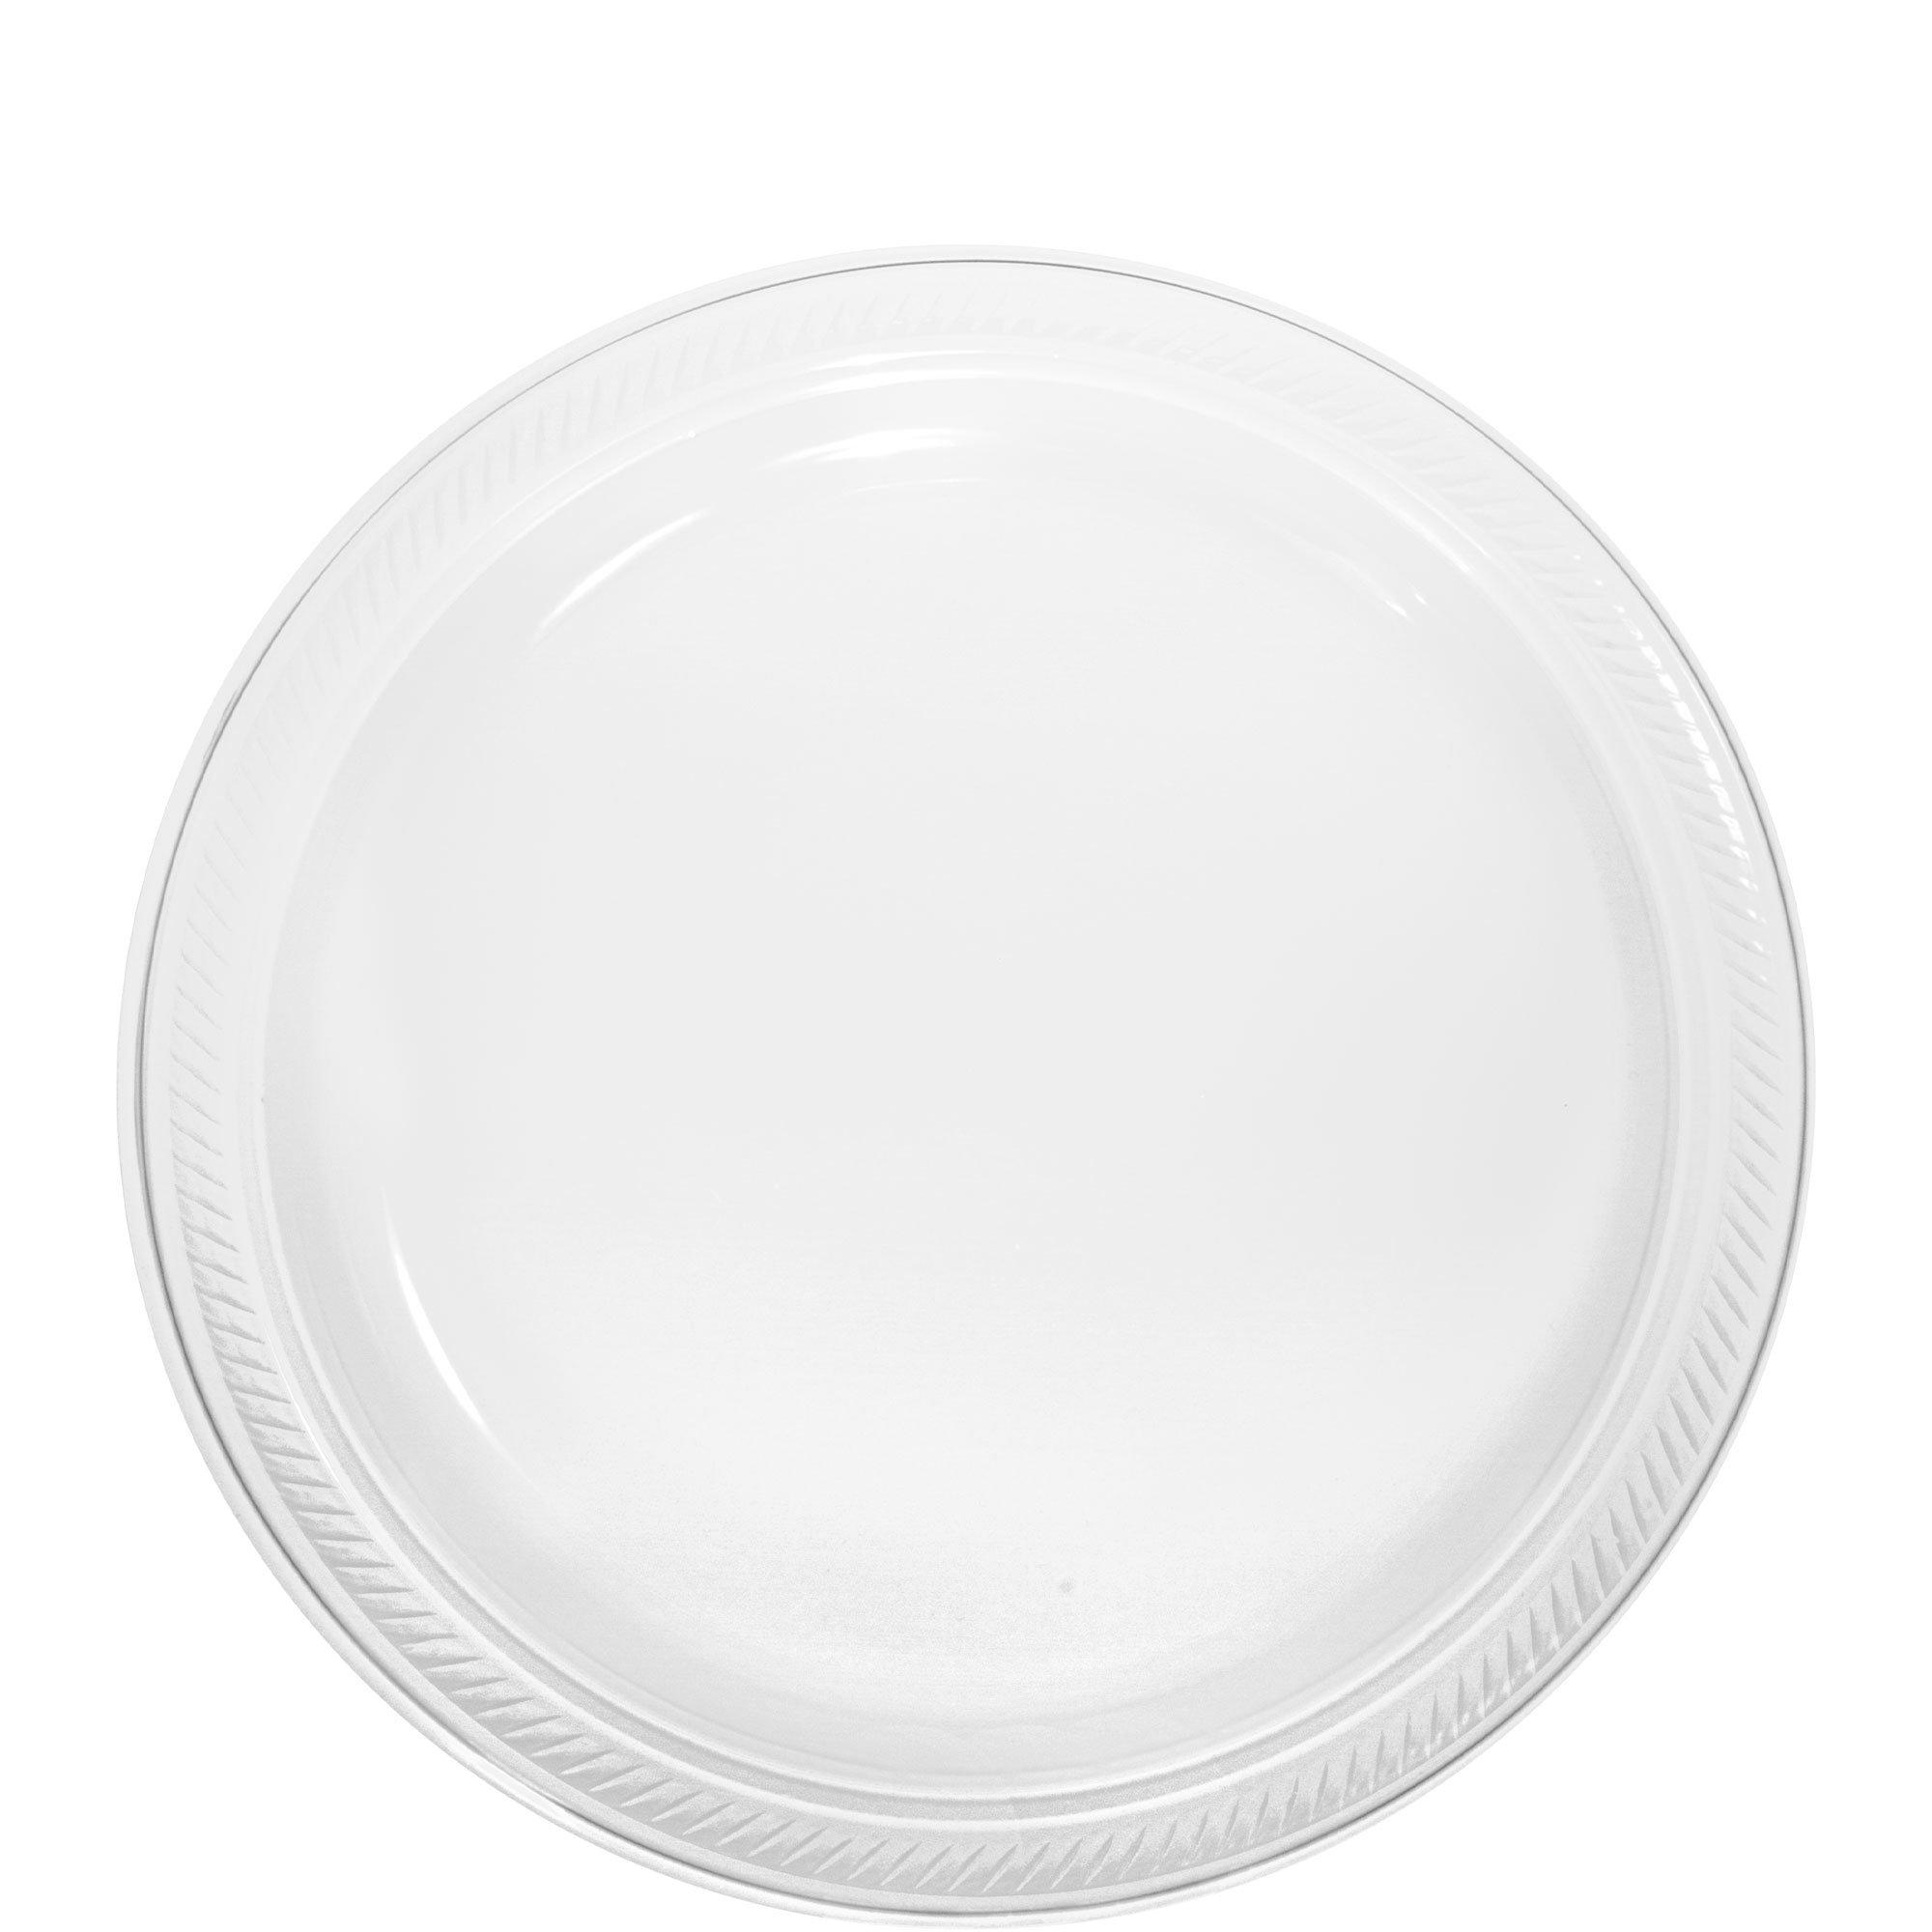 Disposable Plastic Plates Kiwi, 7 Inches Plastic Dessert Plates